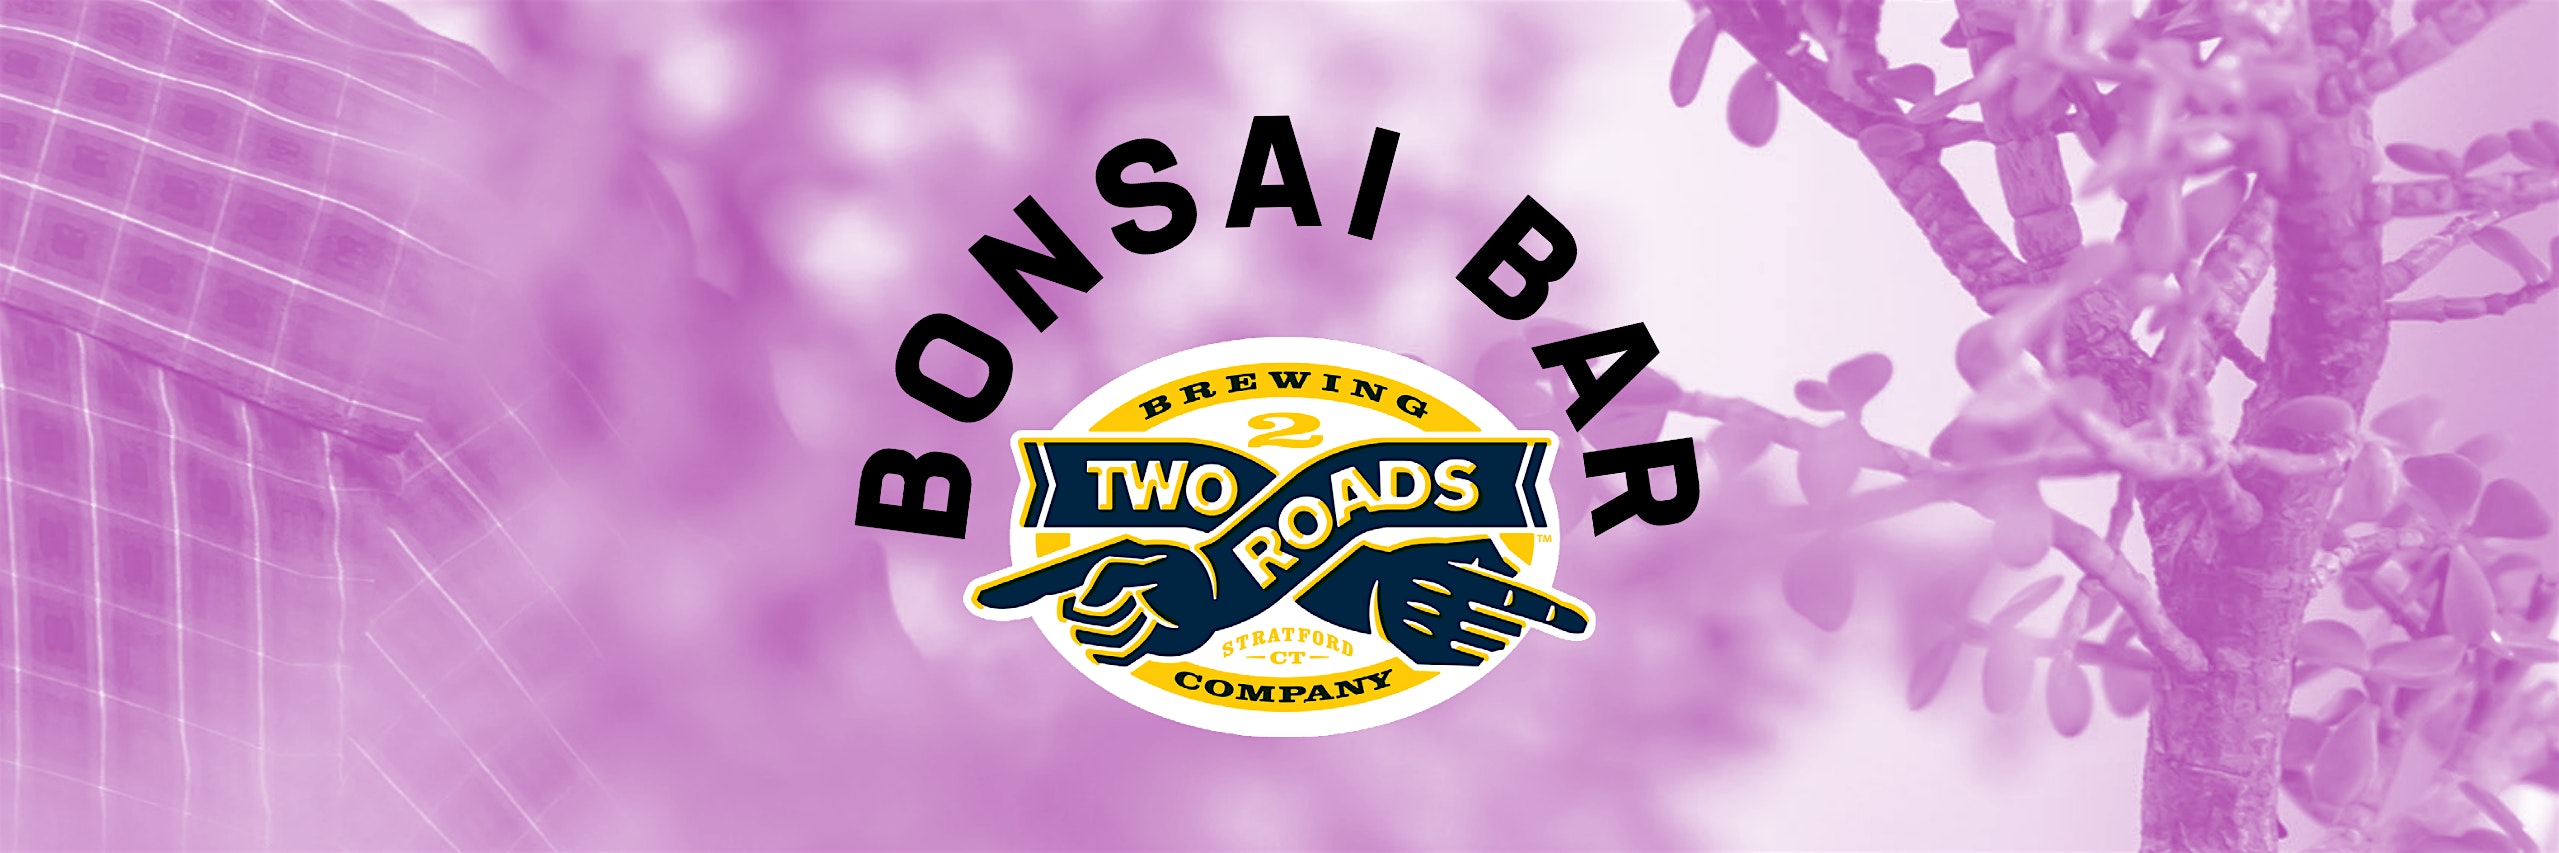 Bonsai Bar @ Two Roads Brewing Company